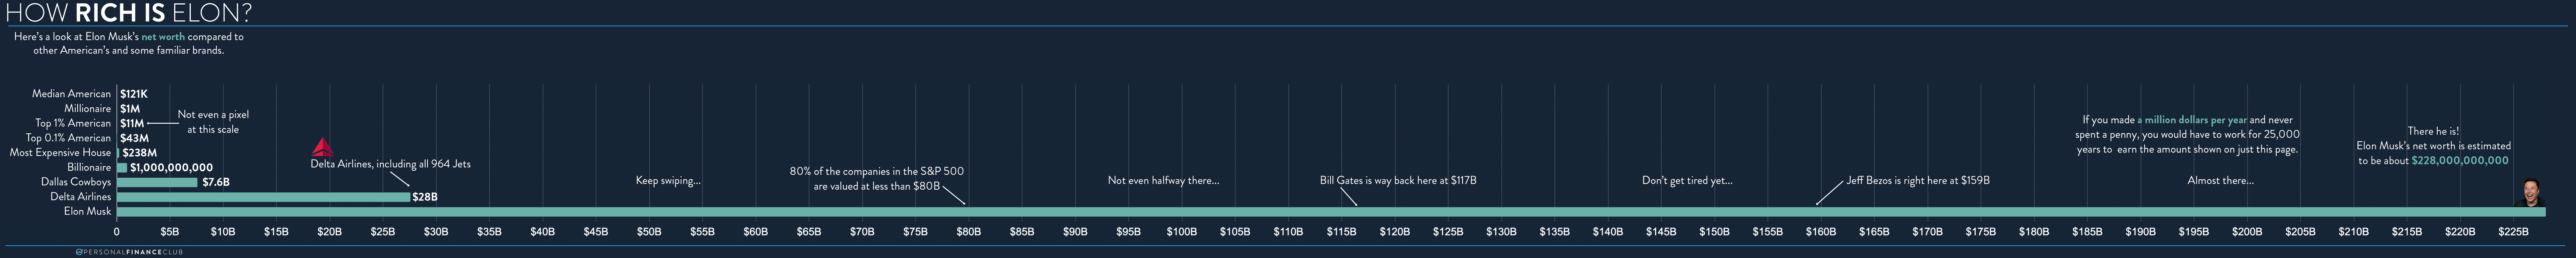 How rich is Elon Musk's Net Worth?